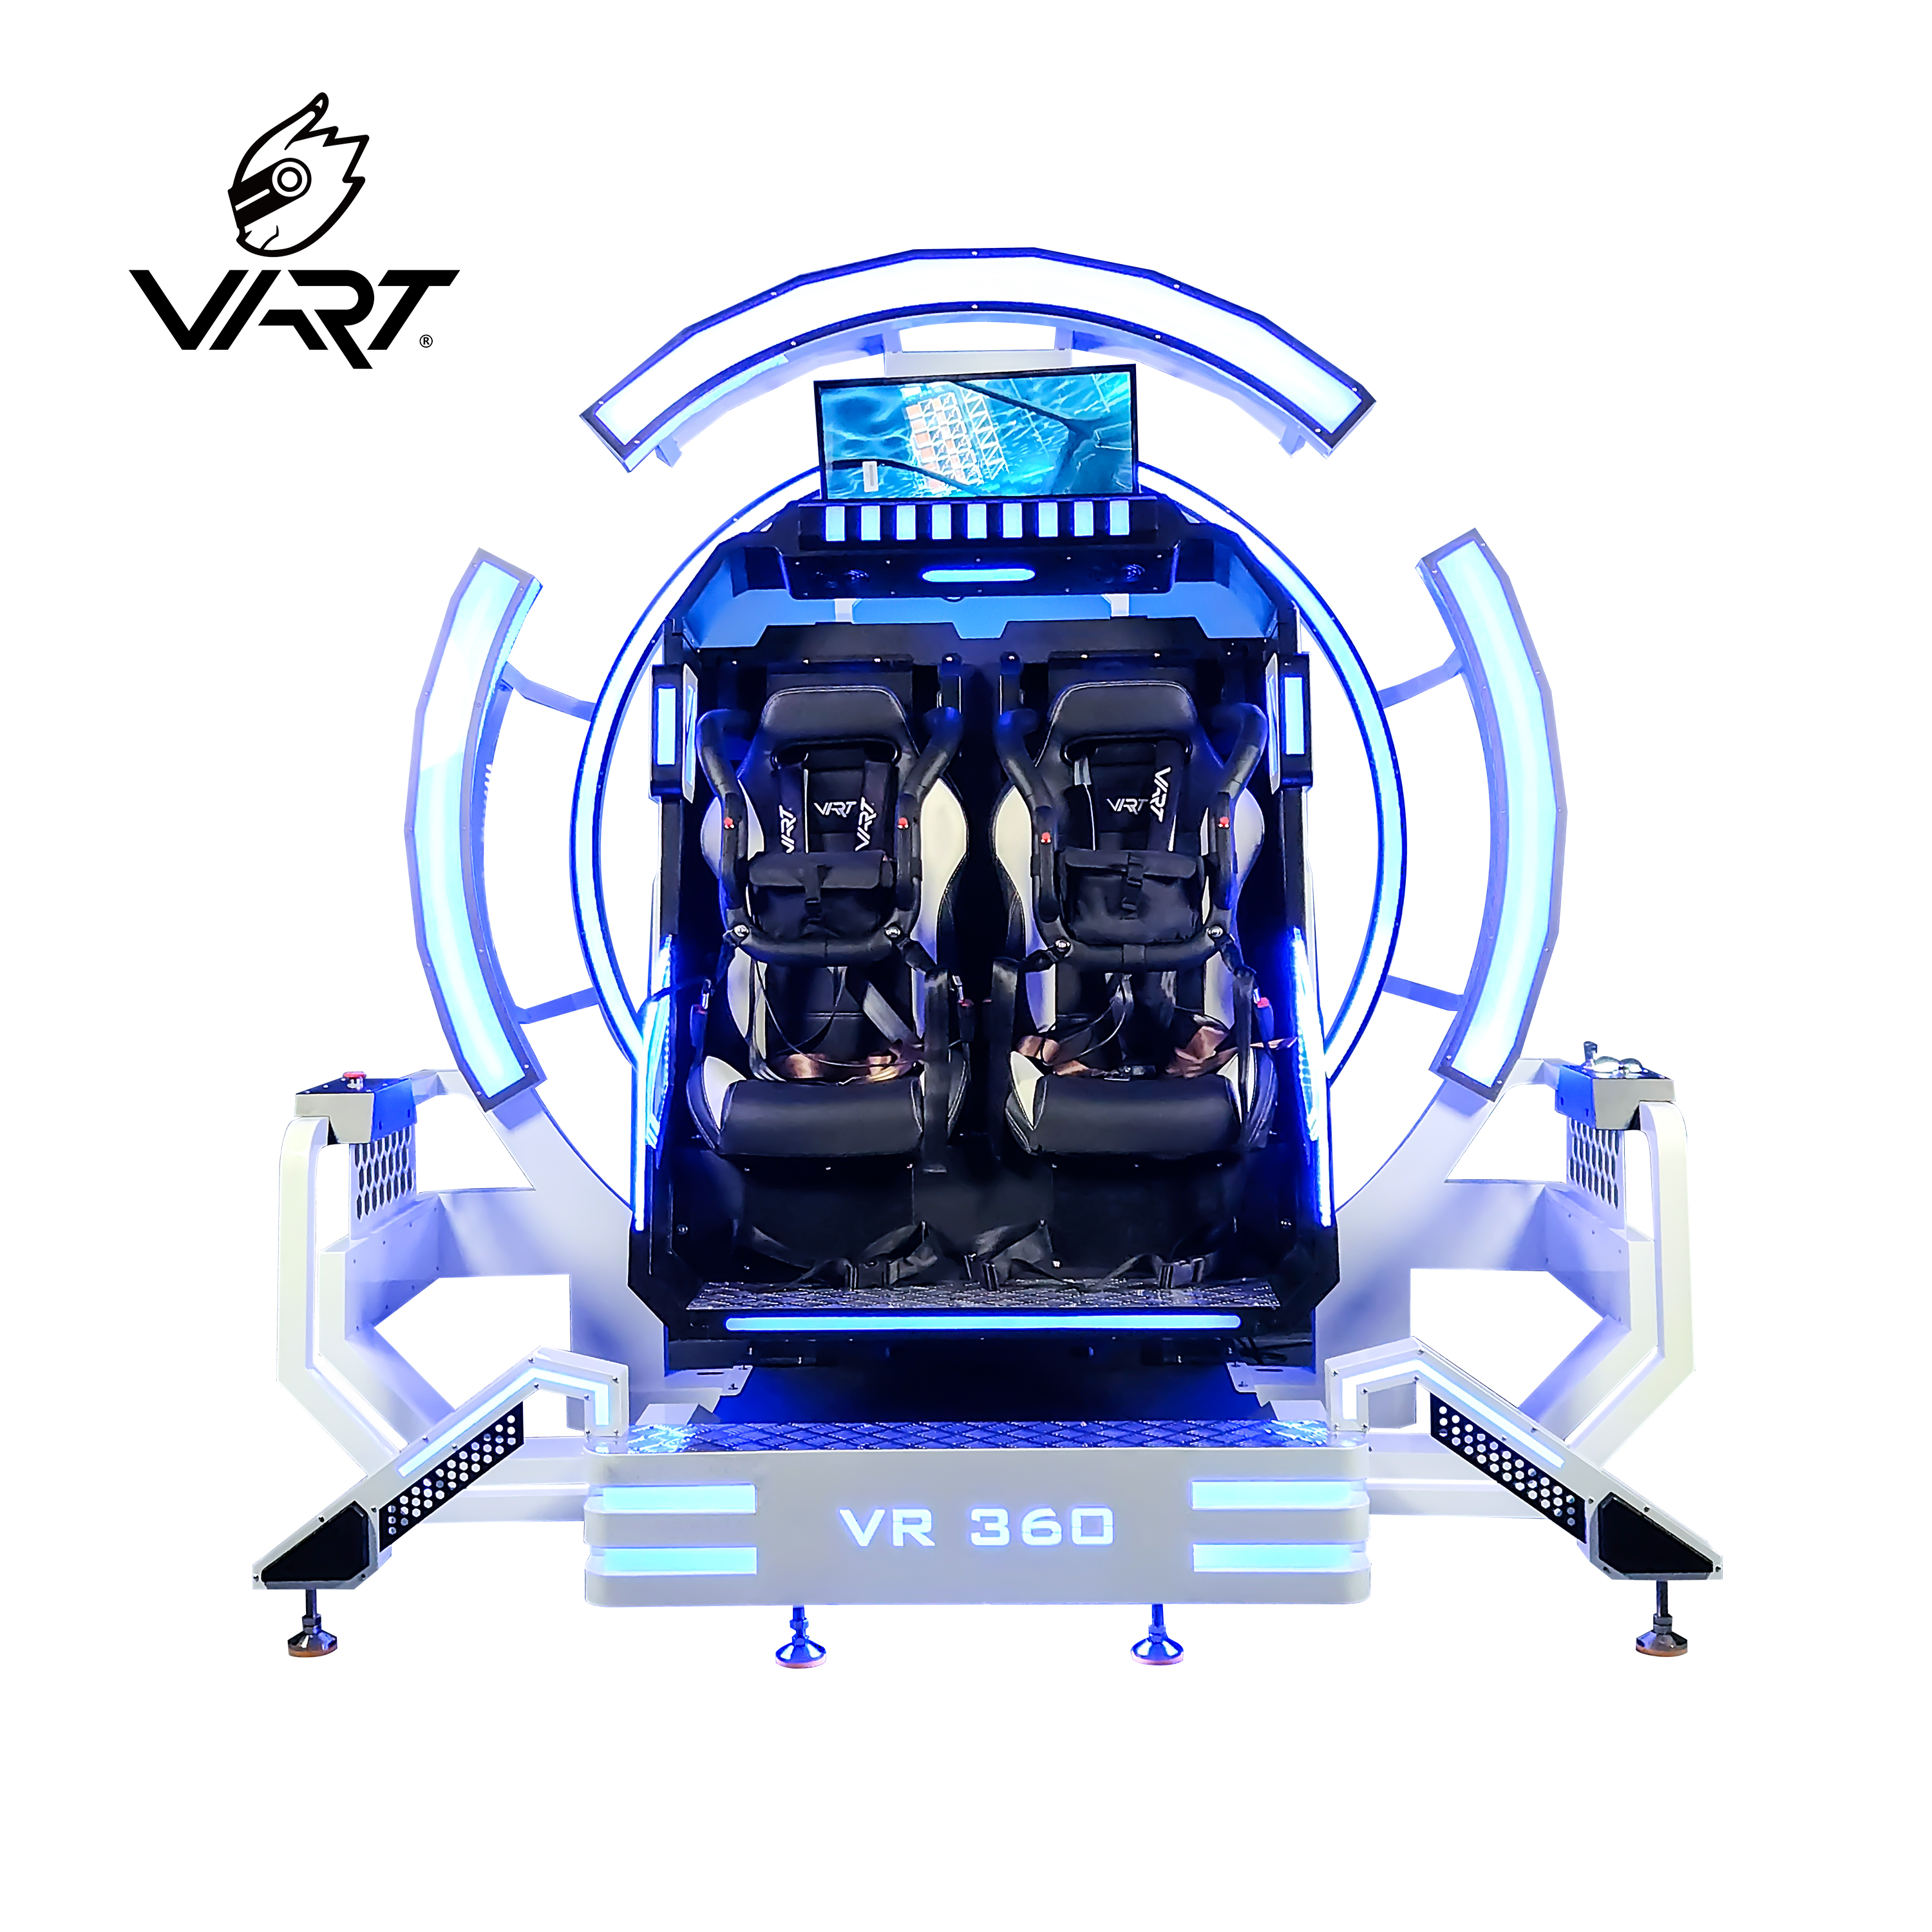 Mtengo wotsika wa 9d Vr 360 Degree Headtracking Roller Coaster Simulator Plus Virtual Reality Vibration 9d Cinema